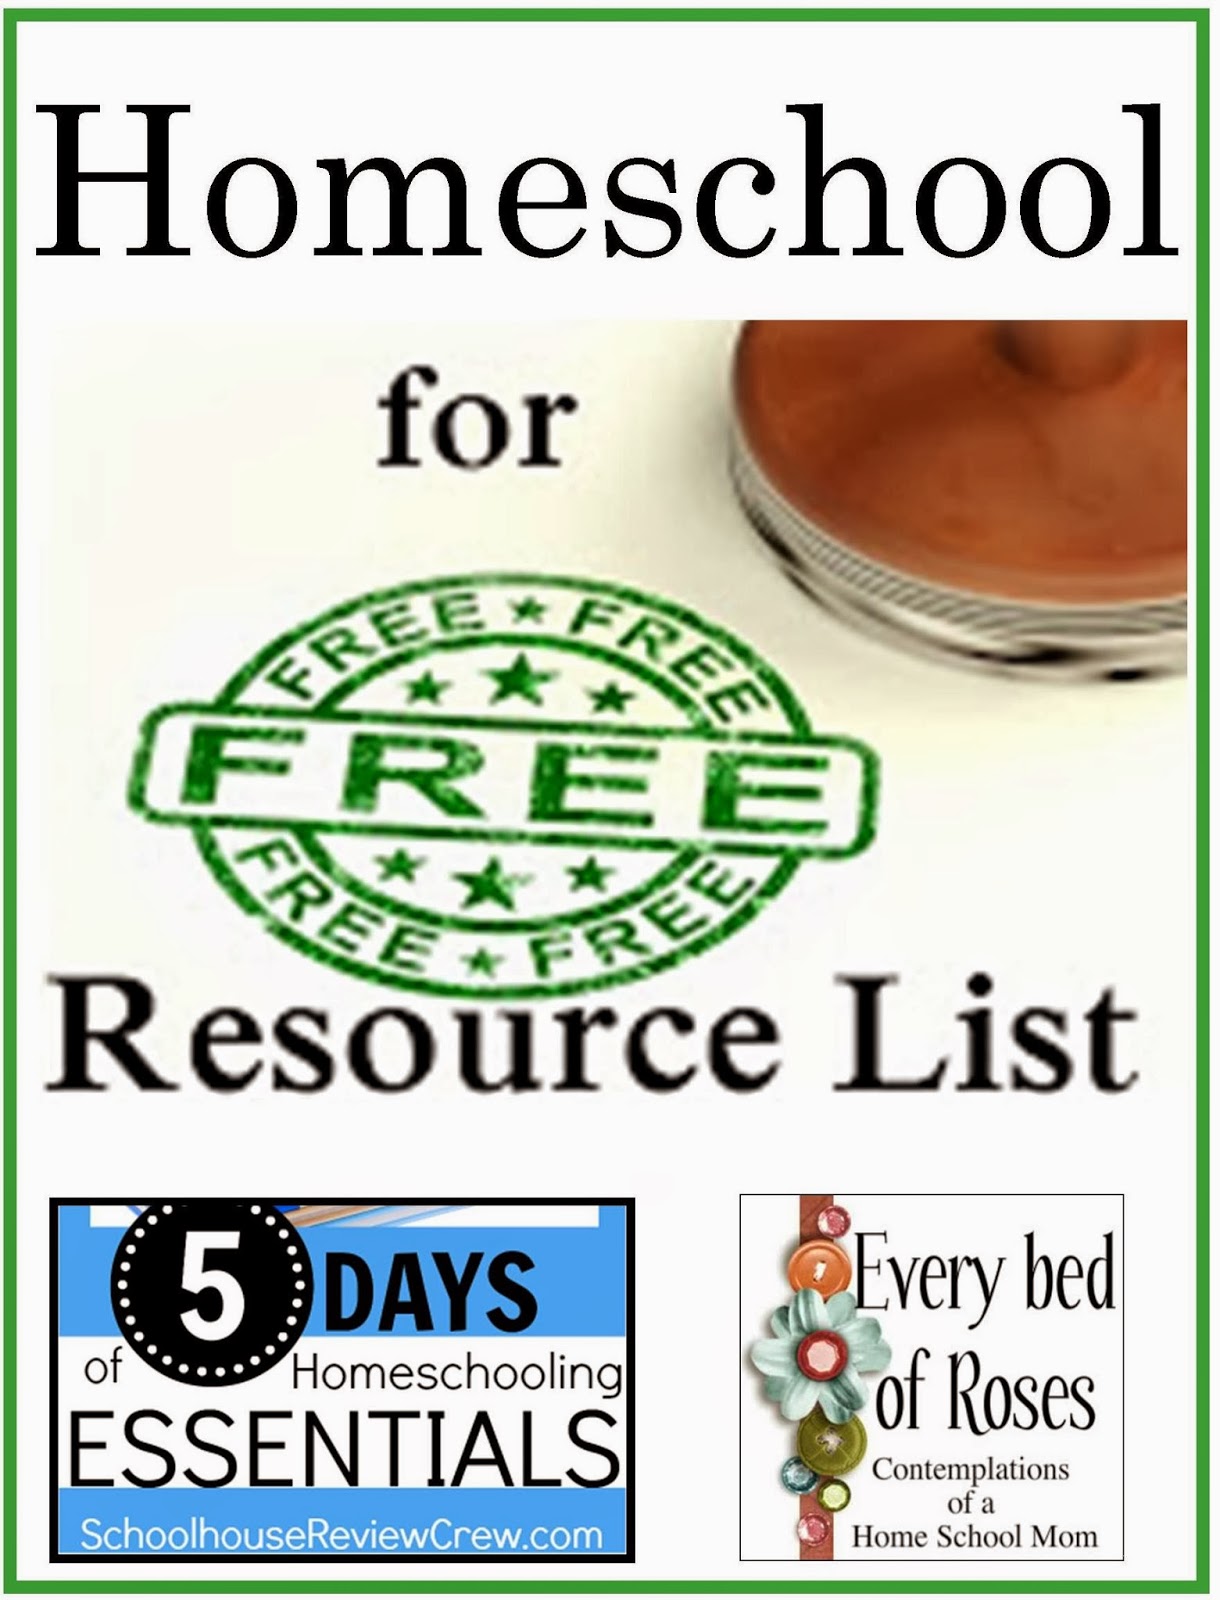 Home School for FREE resource List homeschool essentials